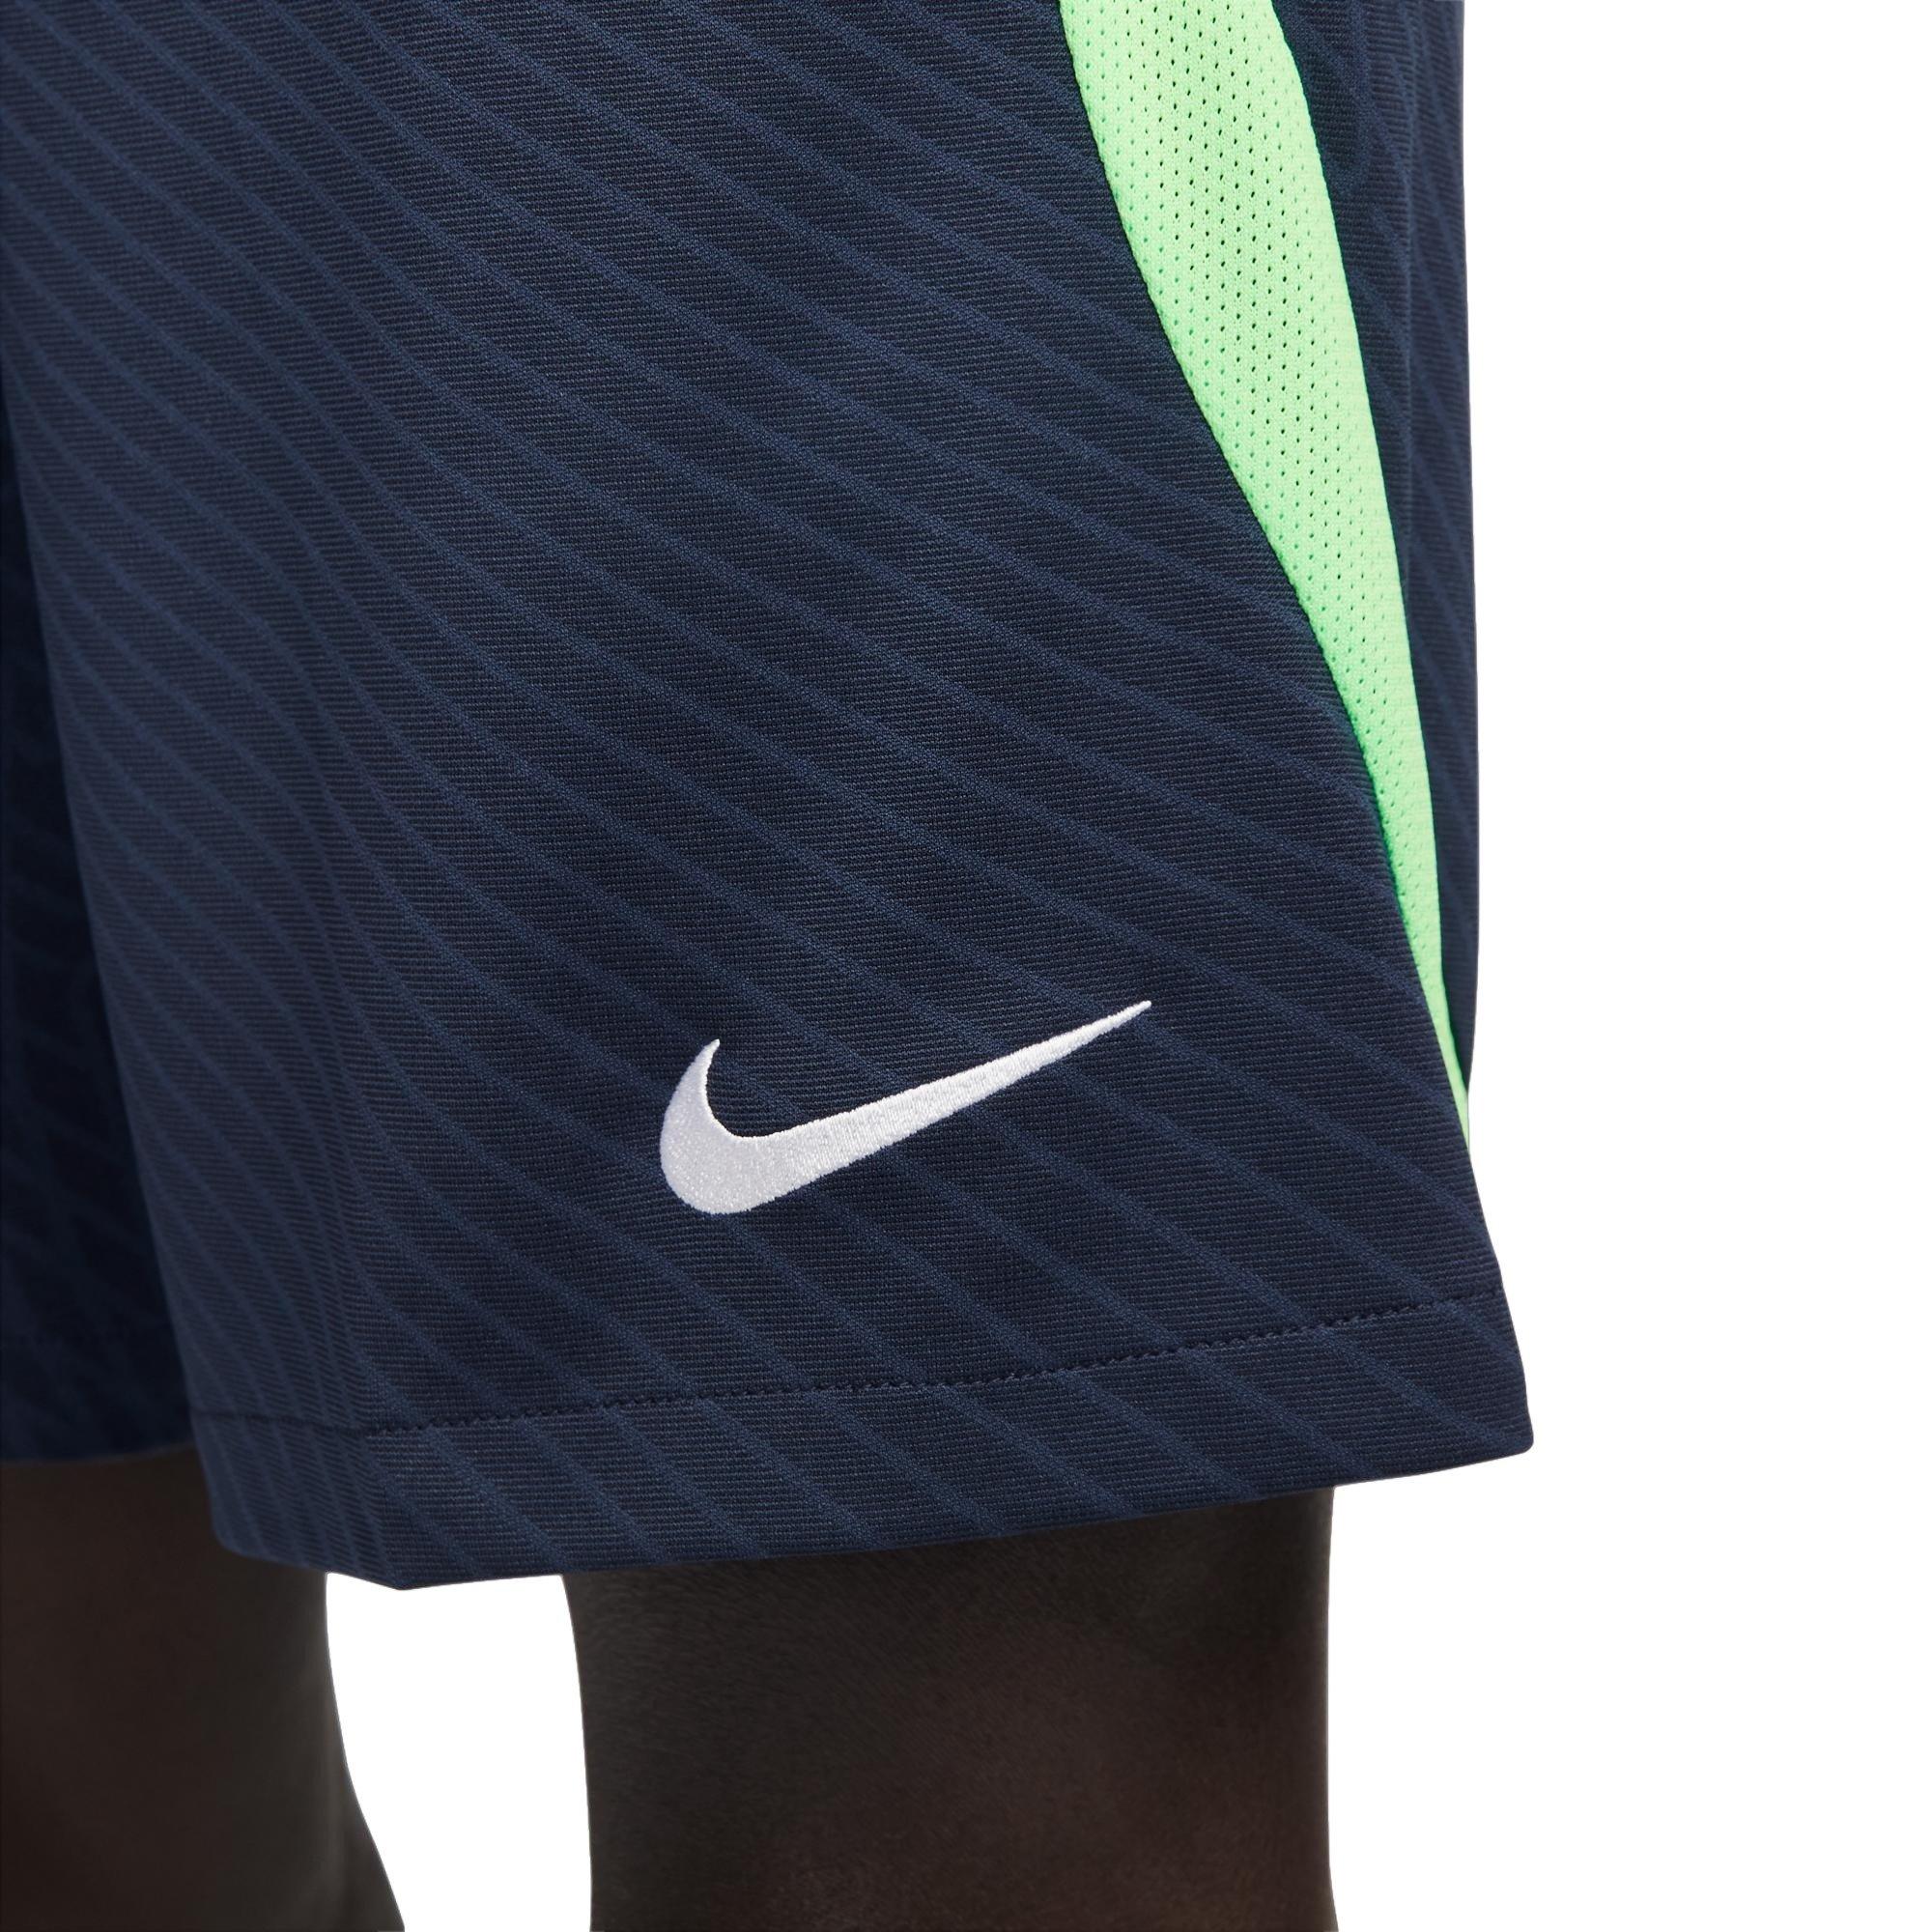 Nike Dri-FIT Strike Men's Soccer Shorts.